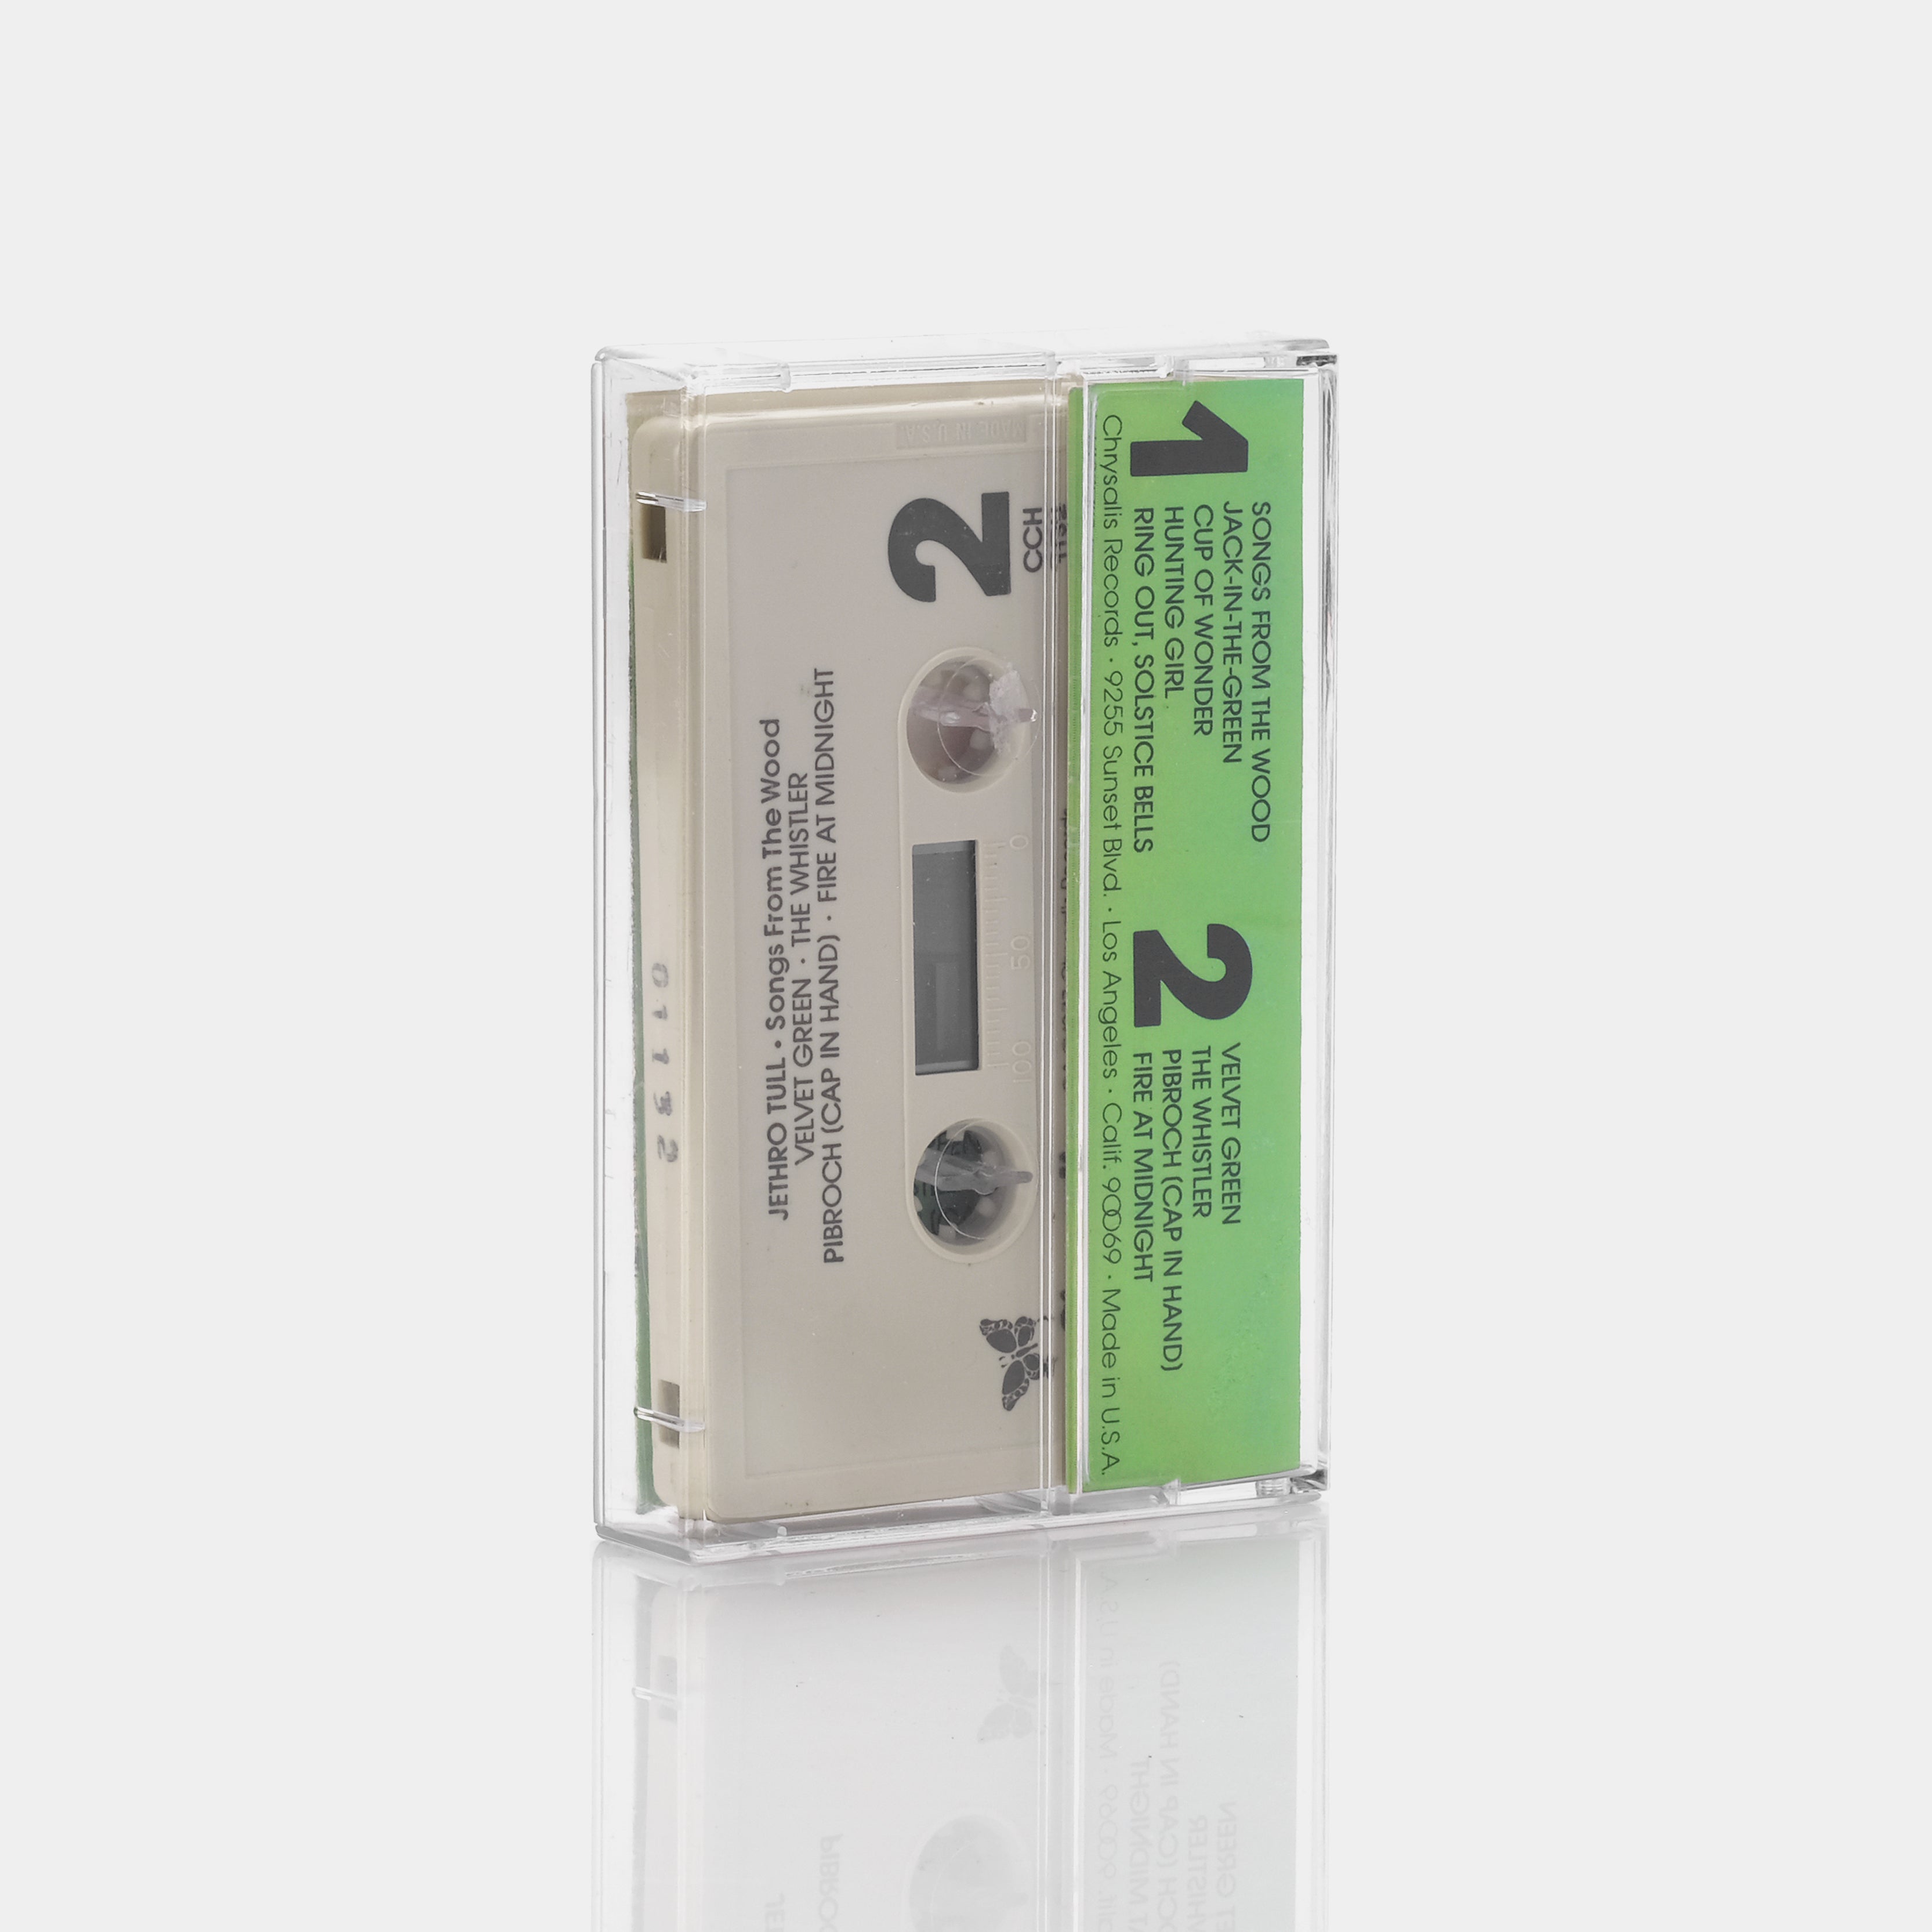 Jethro Tull - Songs From The Wood Cassette Tape